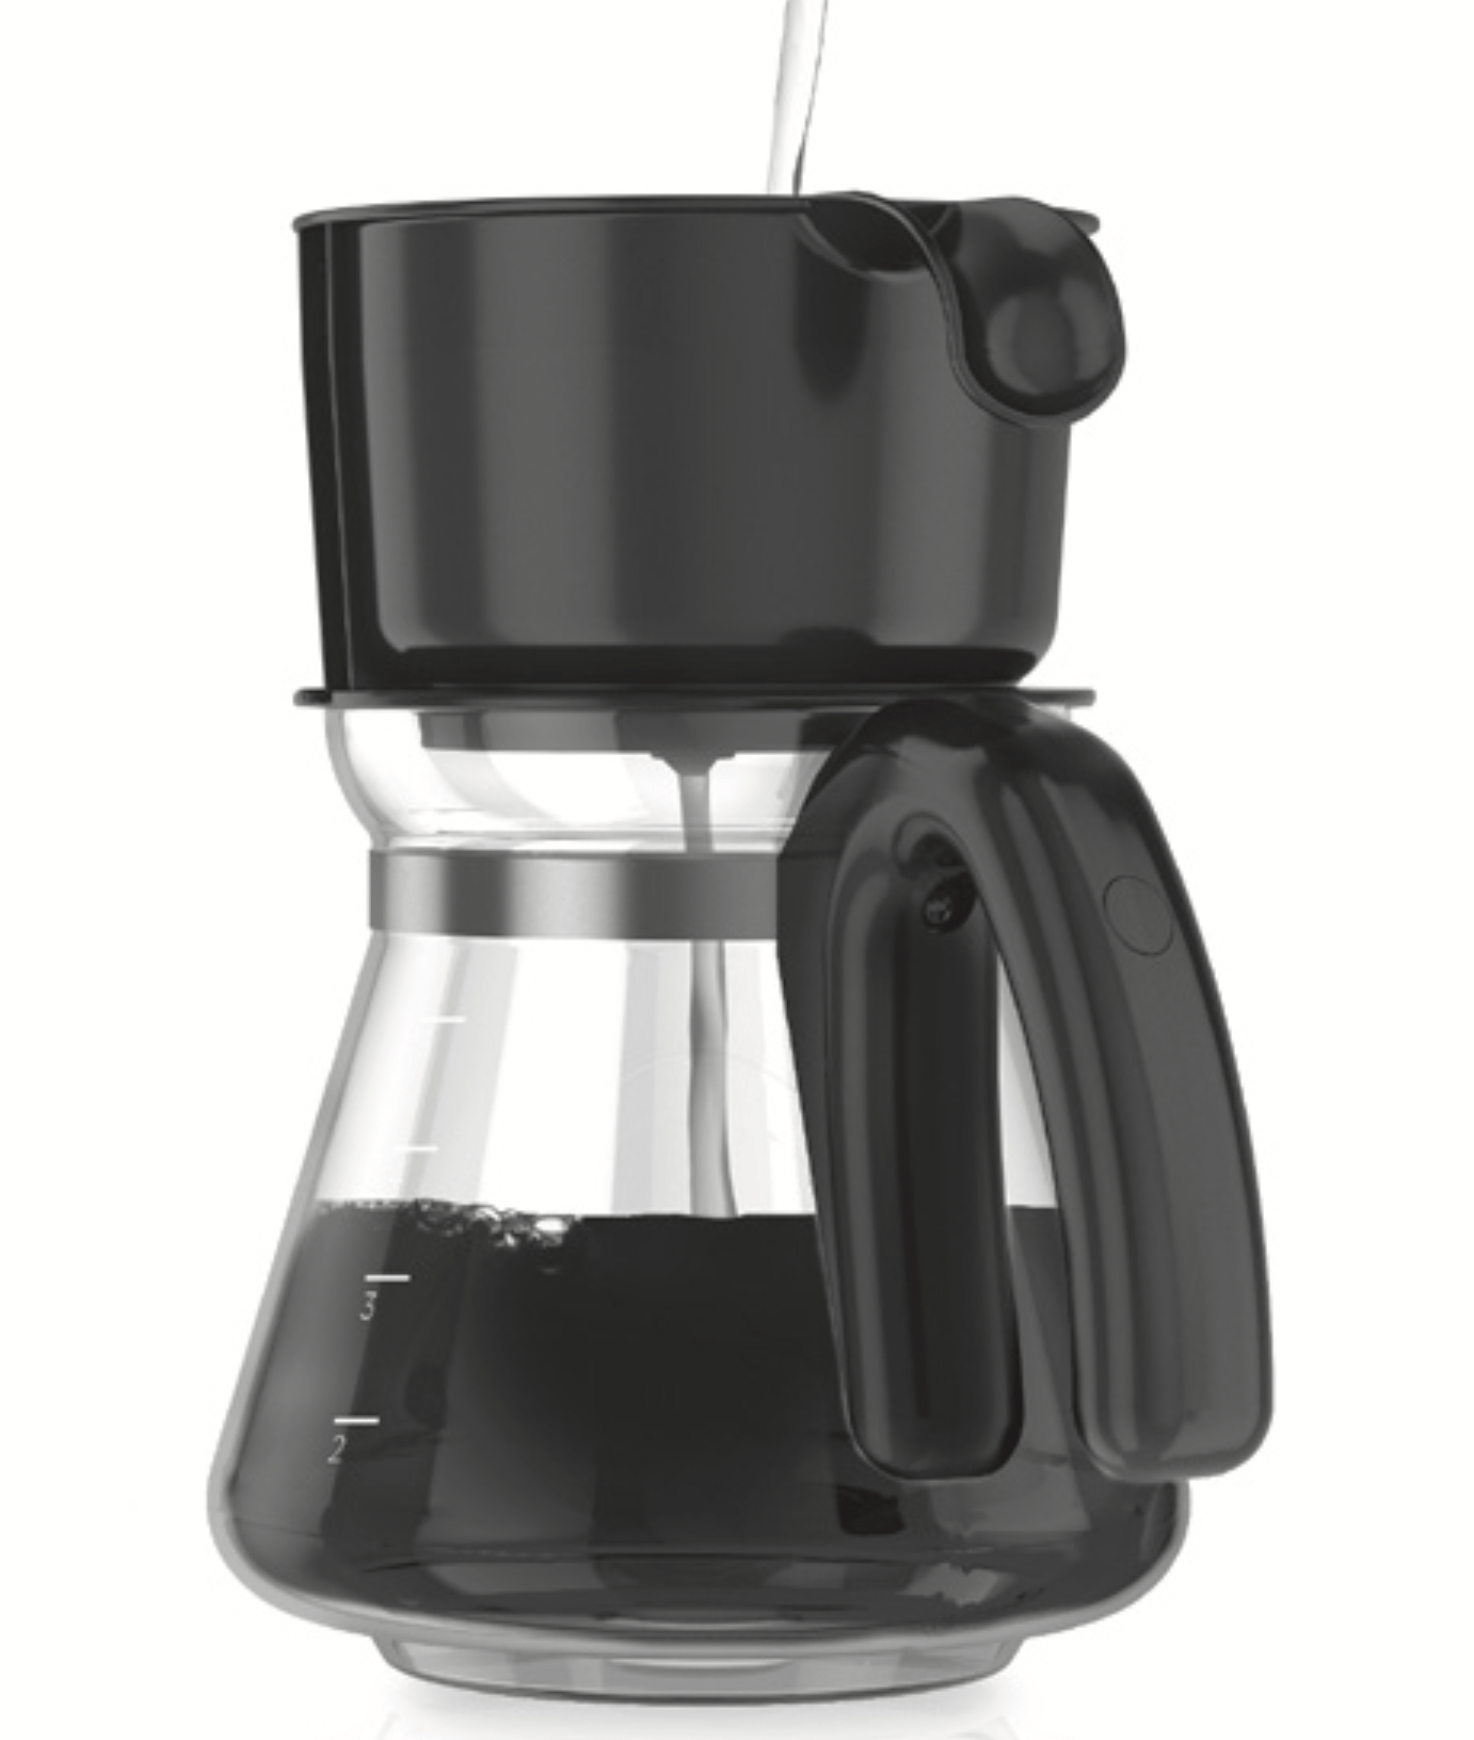 BLACK+DECKER 4-in-1 5-Cup Black Drip Coffee Maker CM0700B - The